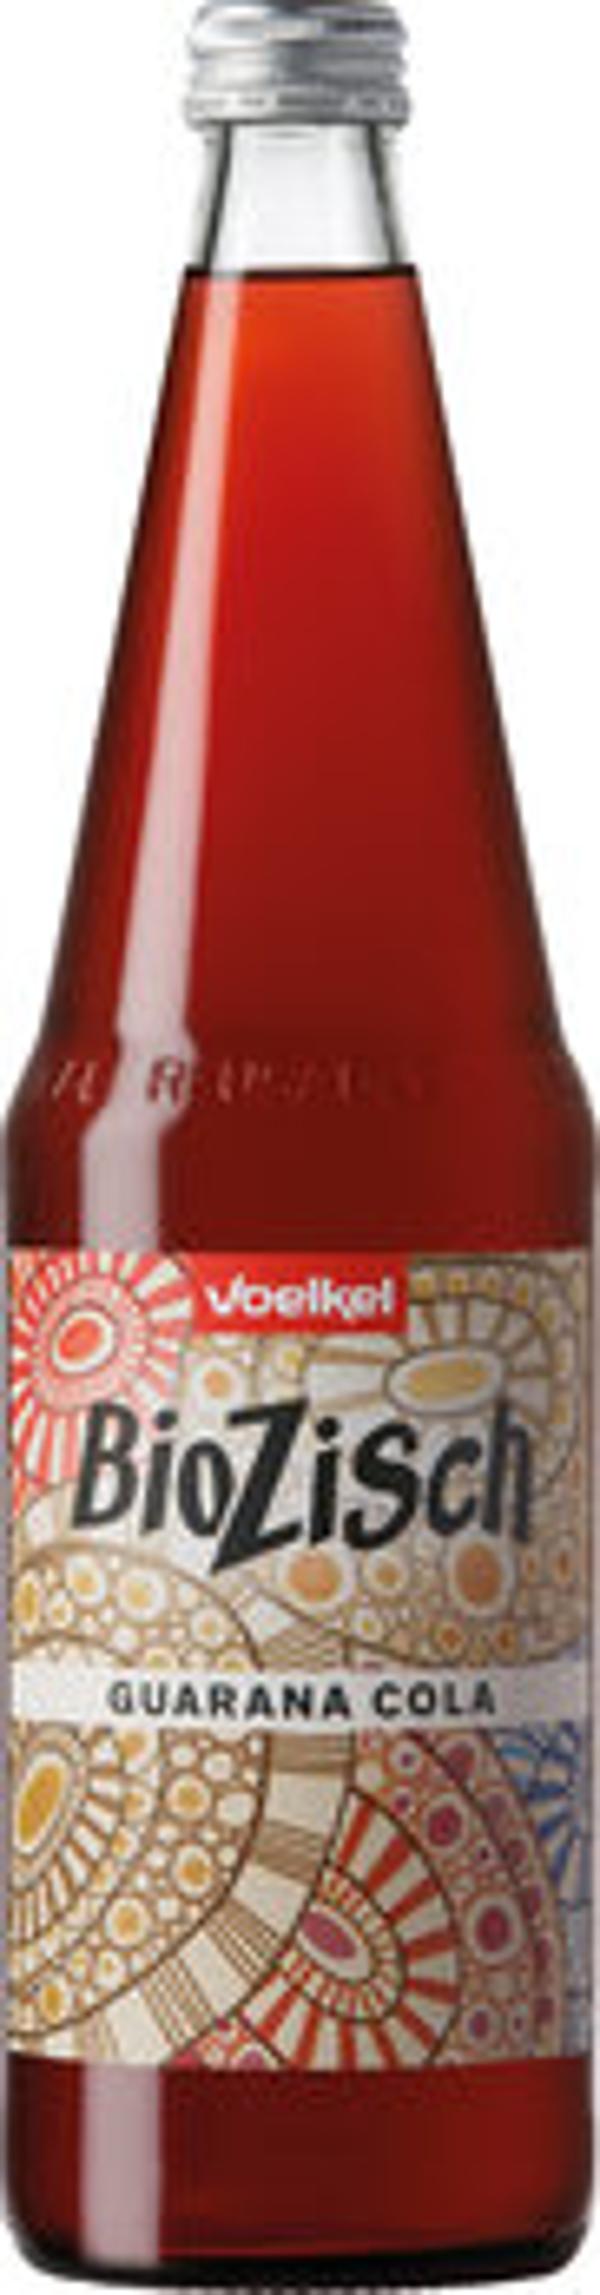 Produktfoto zu Bio Zisch Guarana Cola, 0,7 l